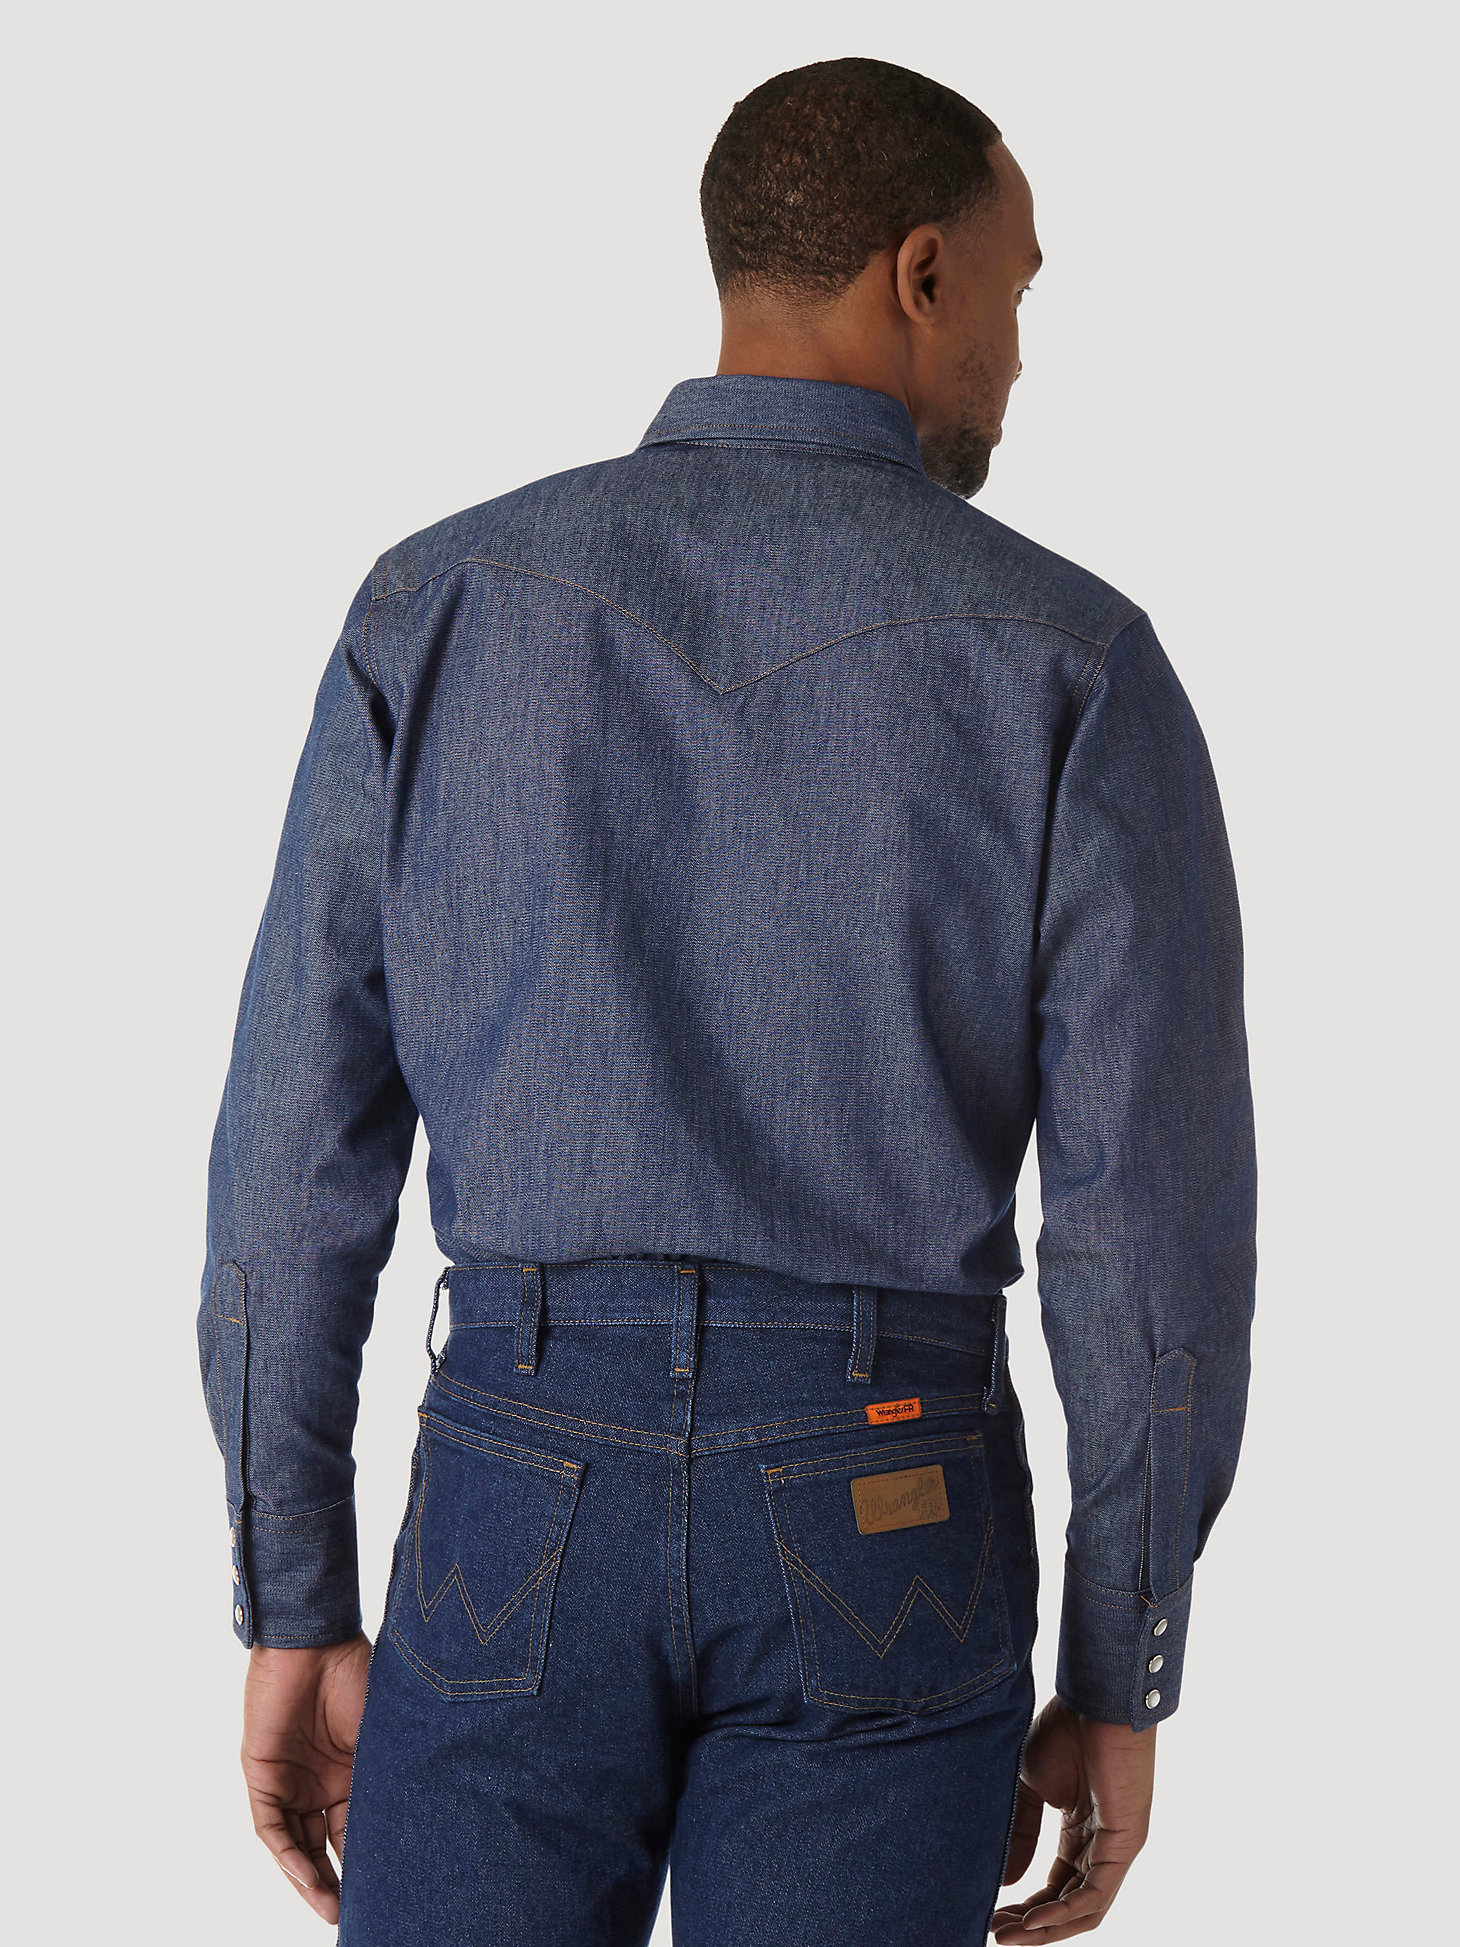 Wrangler® FR Flame Resistant Long Sleeve Denim Work Shirt in Denim alternative view 1